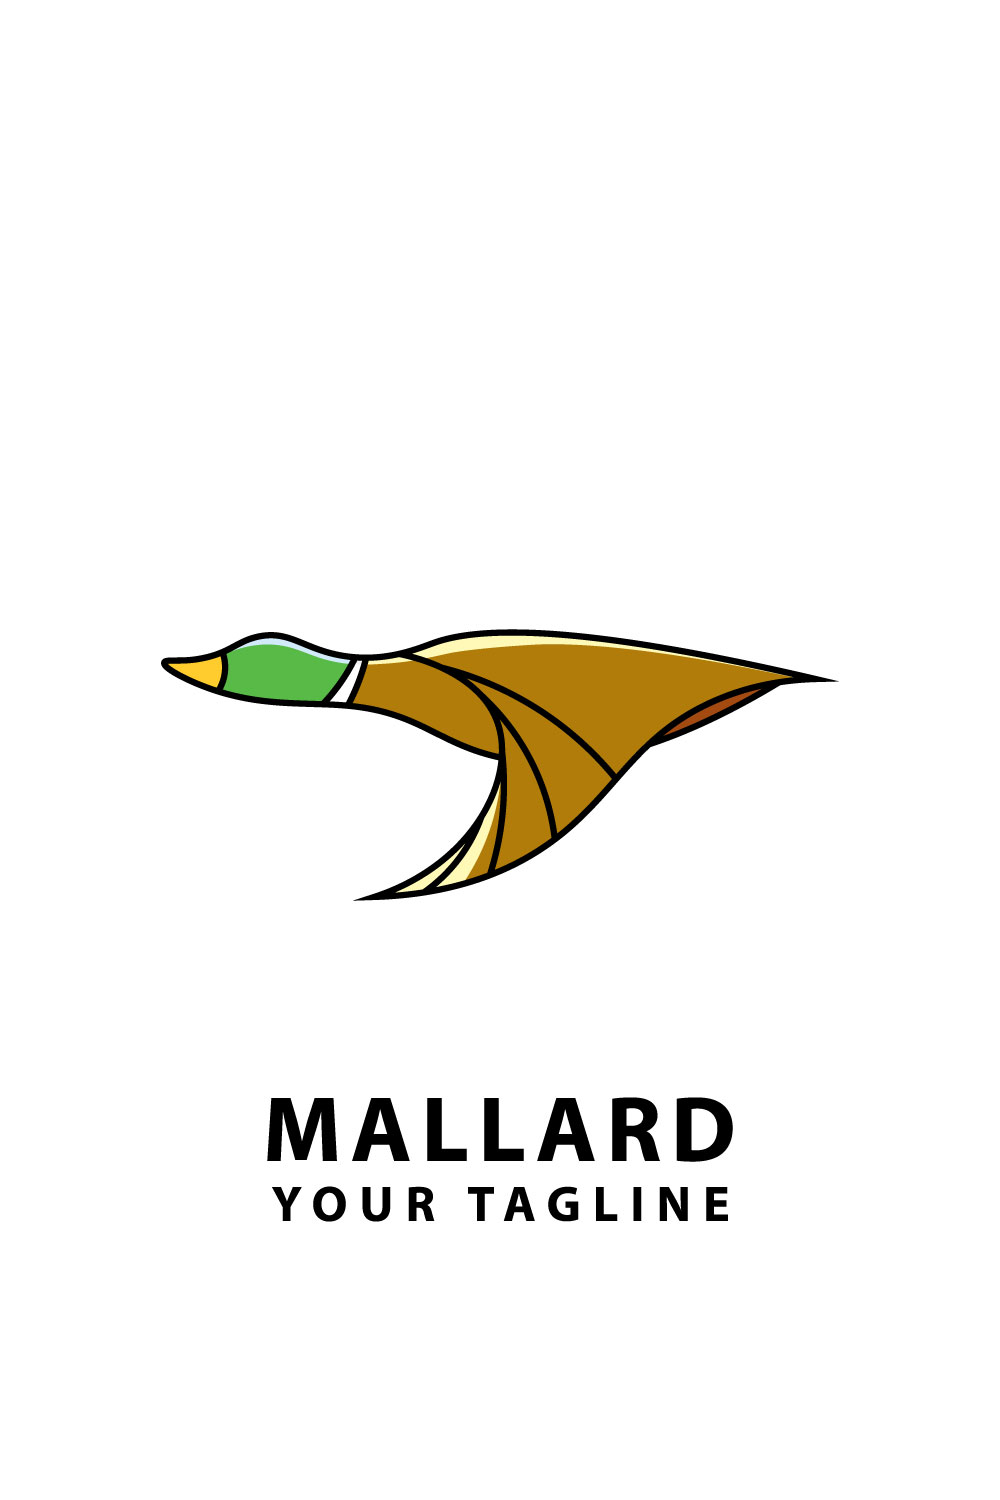 Mallard Logo pinterest preview image.